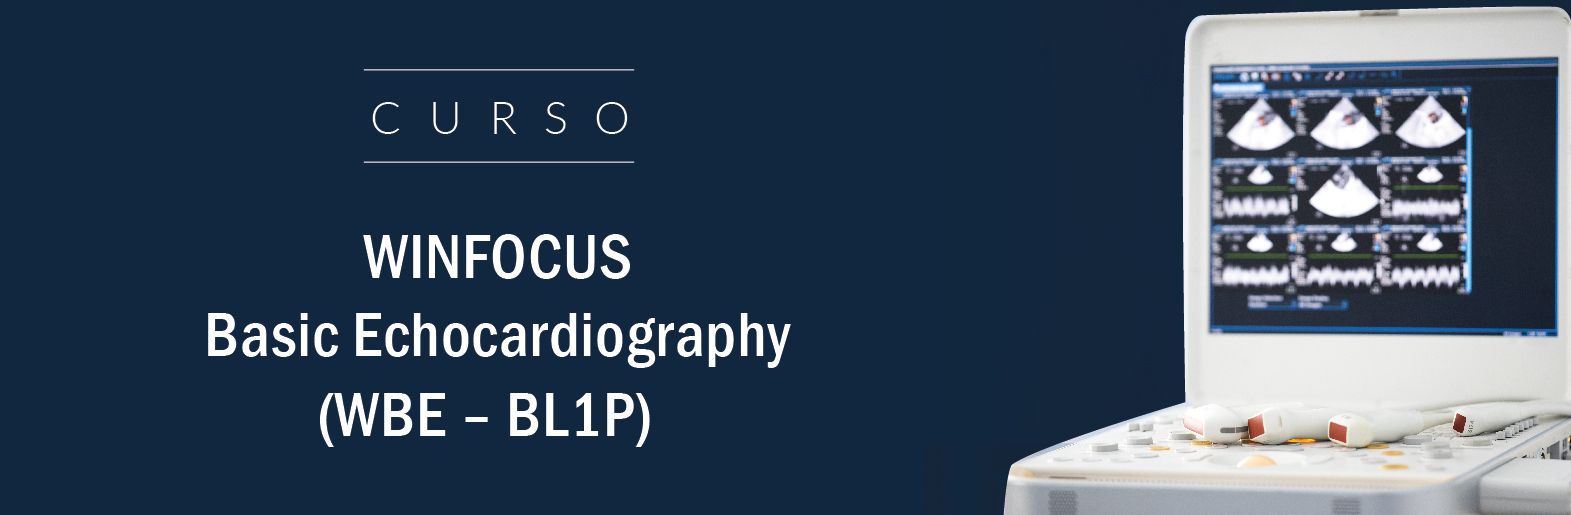 Curso WINFOCUS Basic Echocardiography – (WBE – BL1P) - Fundacion Cardioinfantil